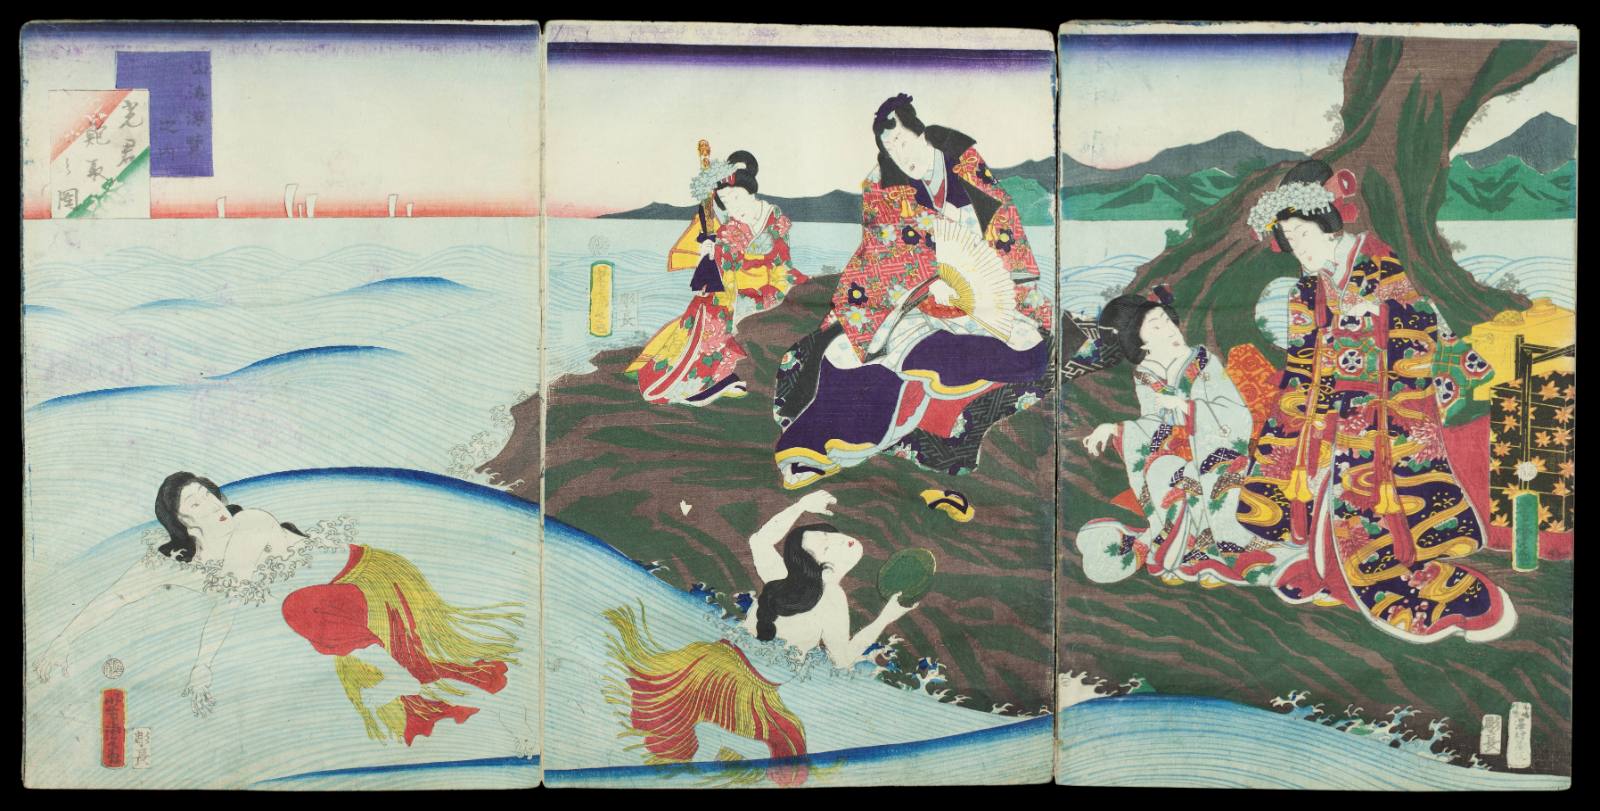 Hikaru-gimi awabi-tori no zu (Lord Genji Gathering Abalone)